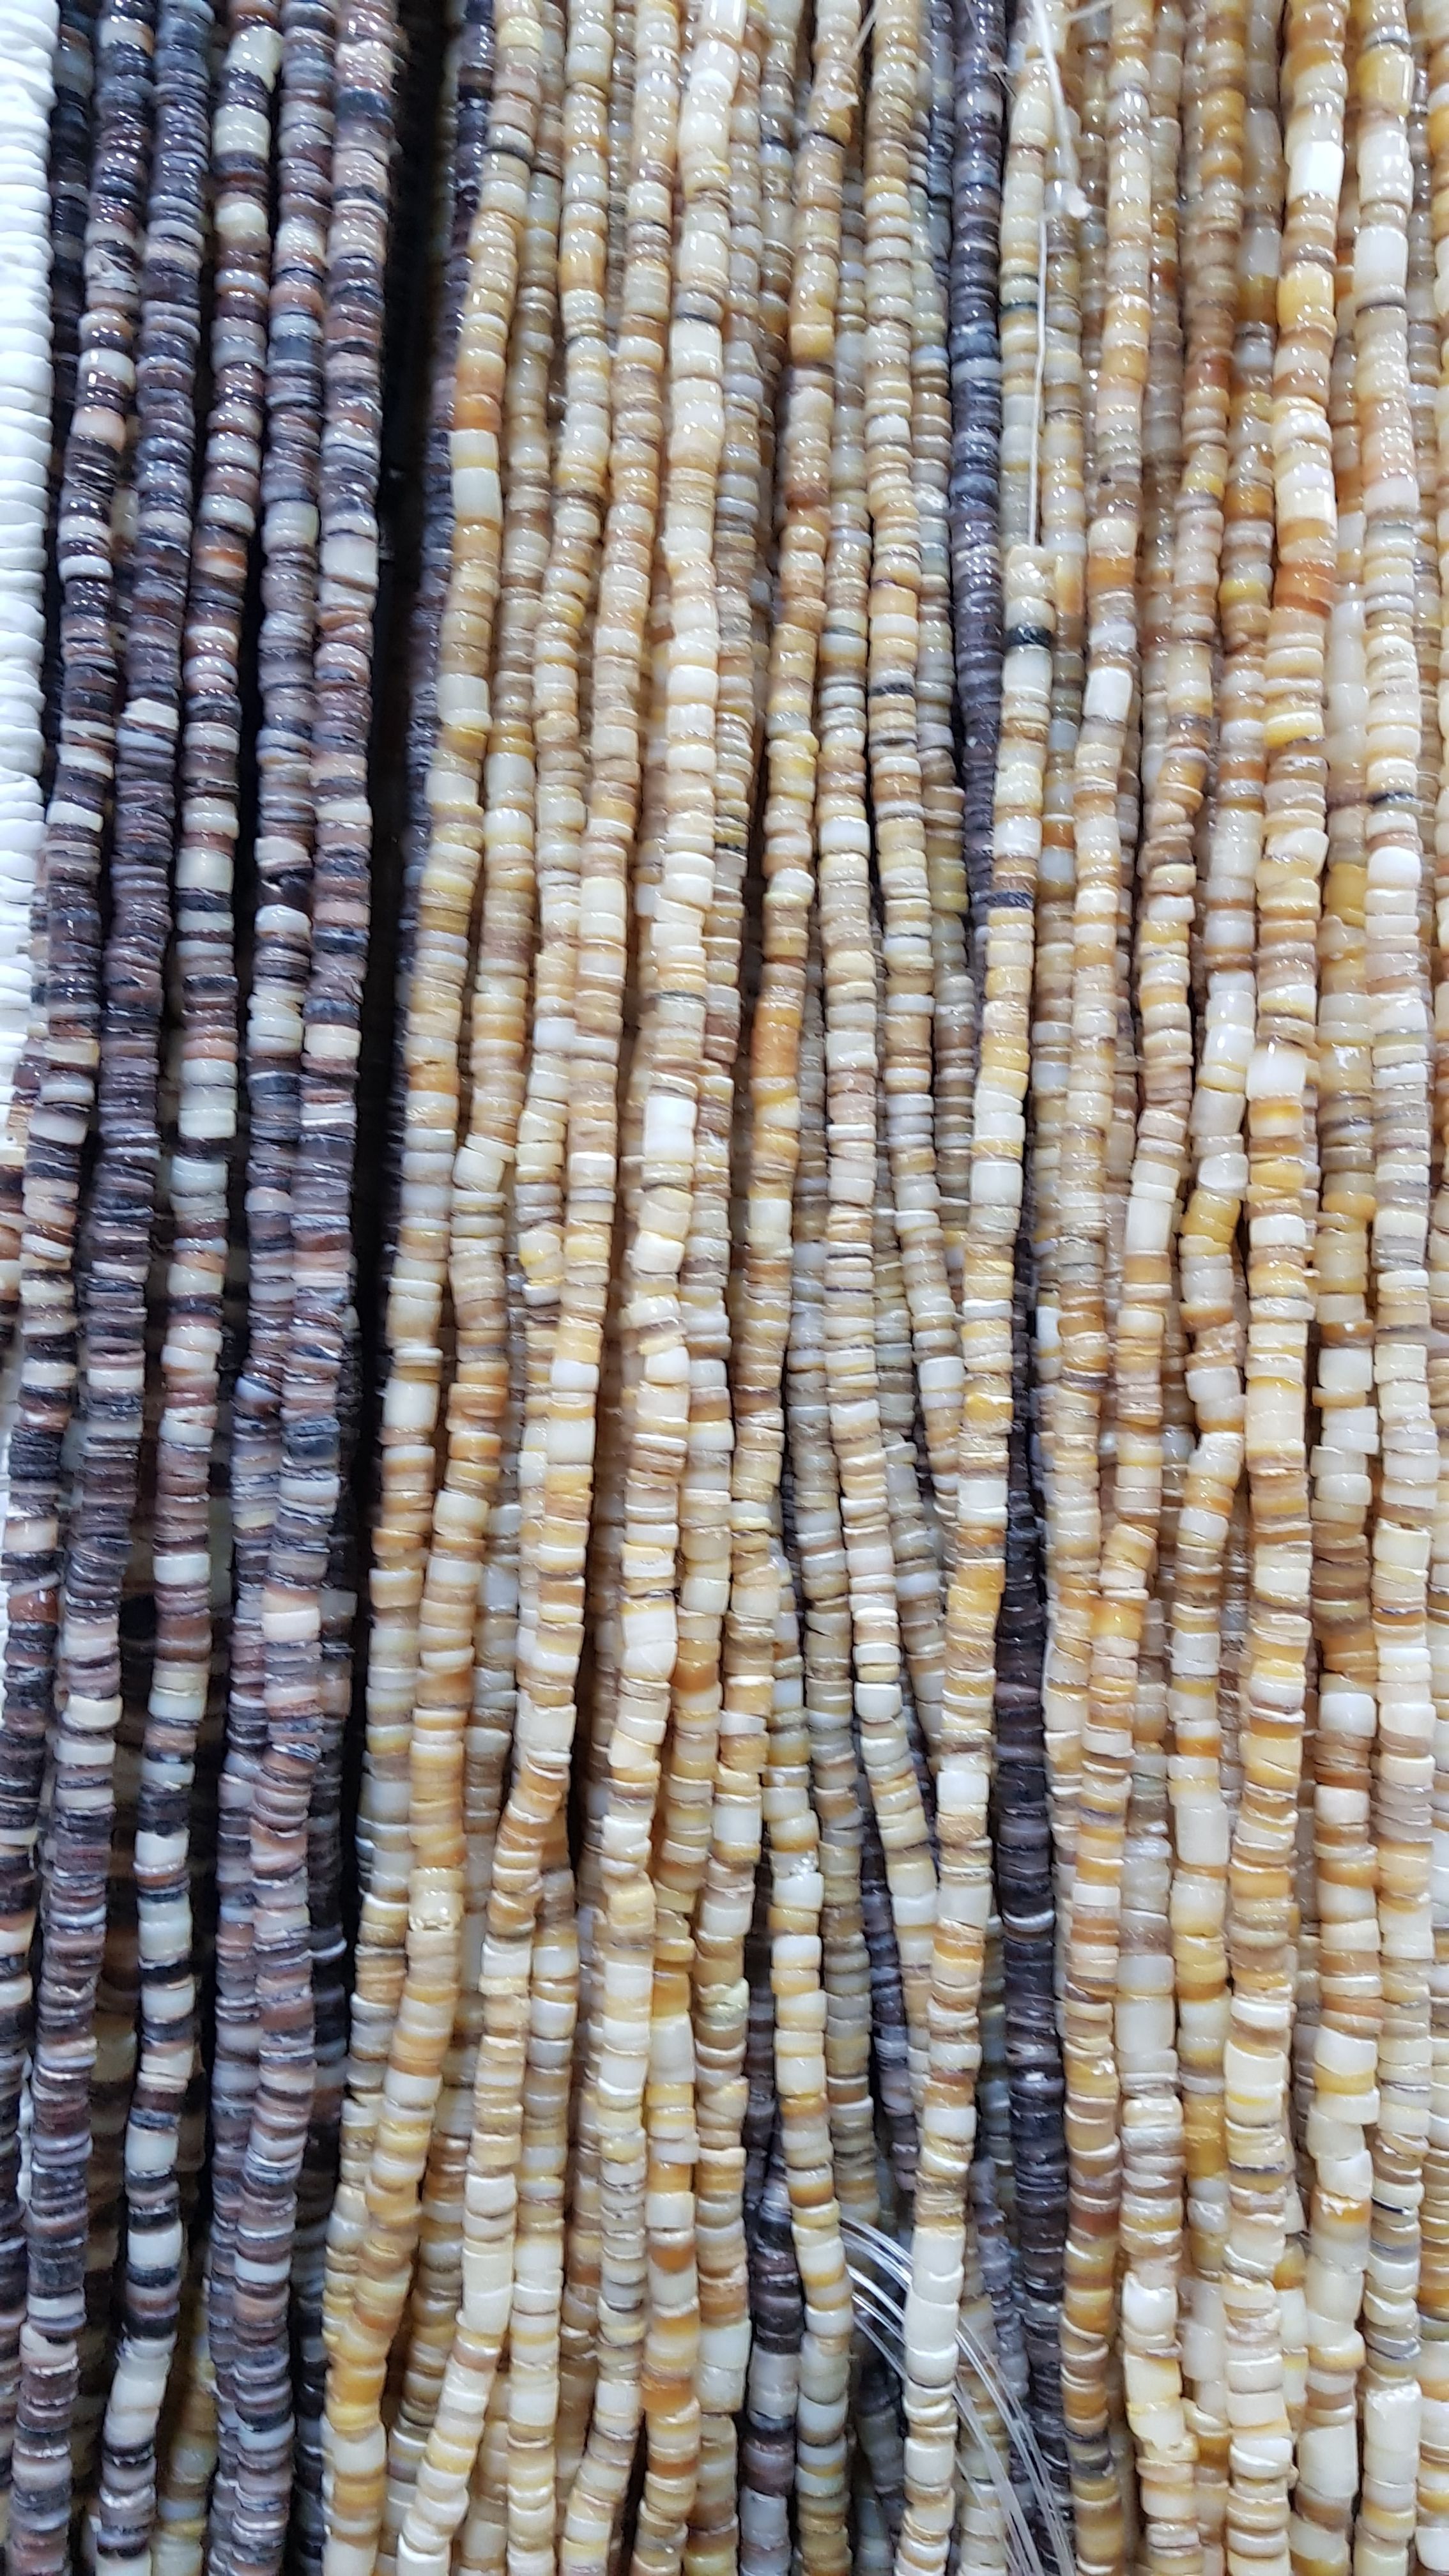 Sea Shell Beads